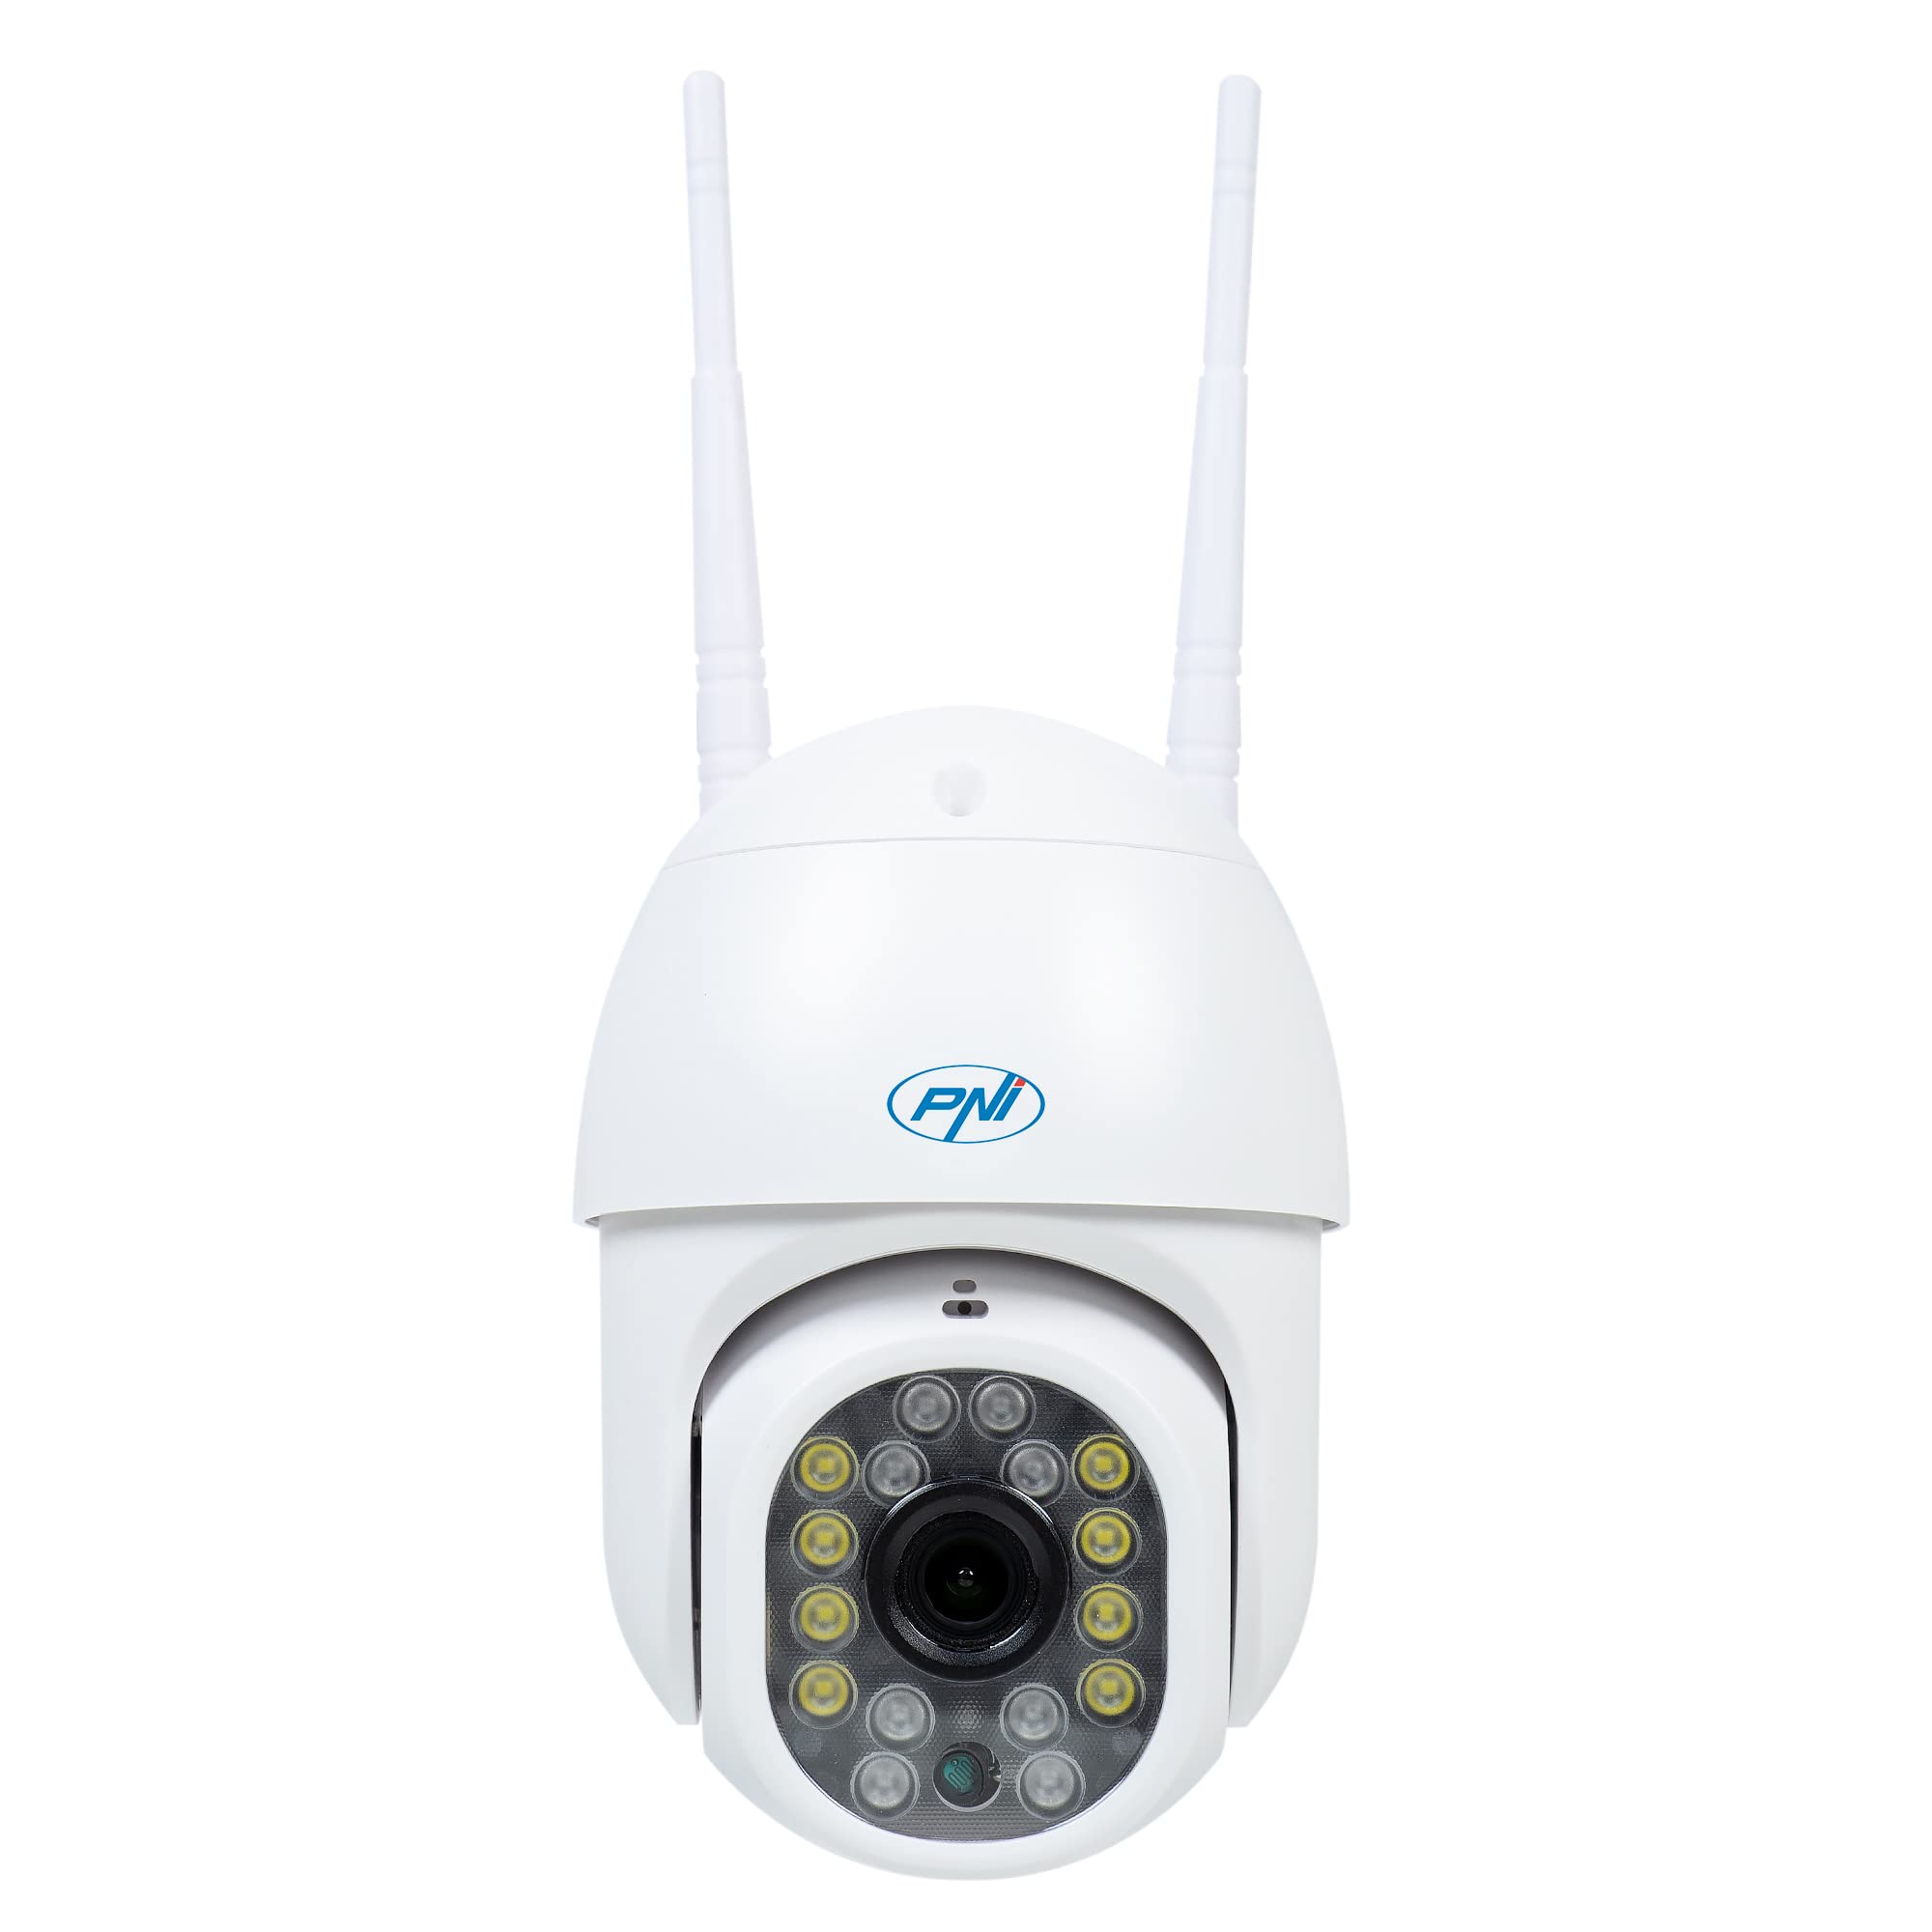 PNI IP440 WLAN-PTZ-Funk-Videoüberwachungskamera, 4 MP, digitaler Zoom, Micro-SD-Steckplatz, eigenständig, Bewegungserkennungsalarm, Bewegungsverfolgung